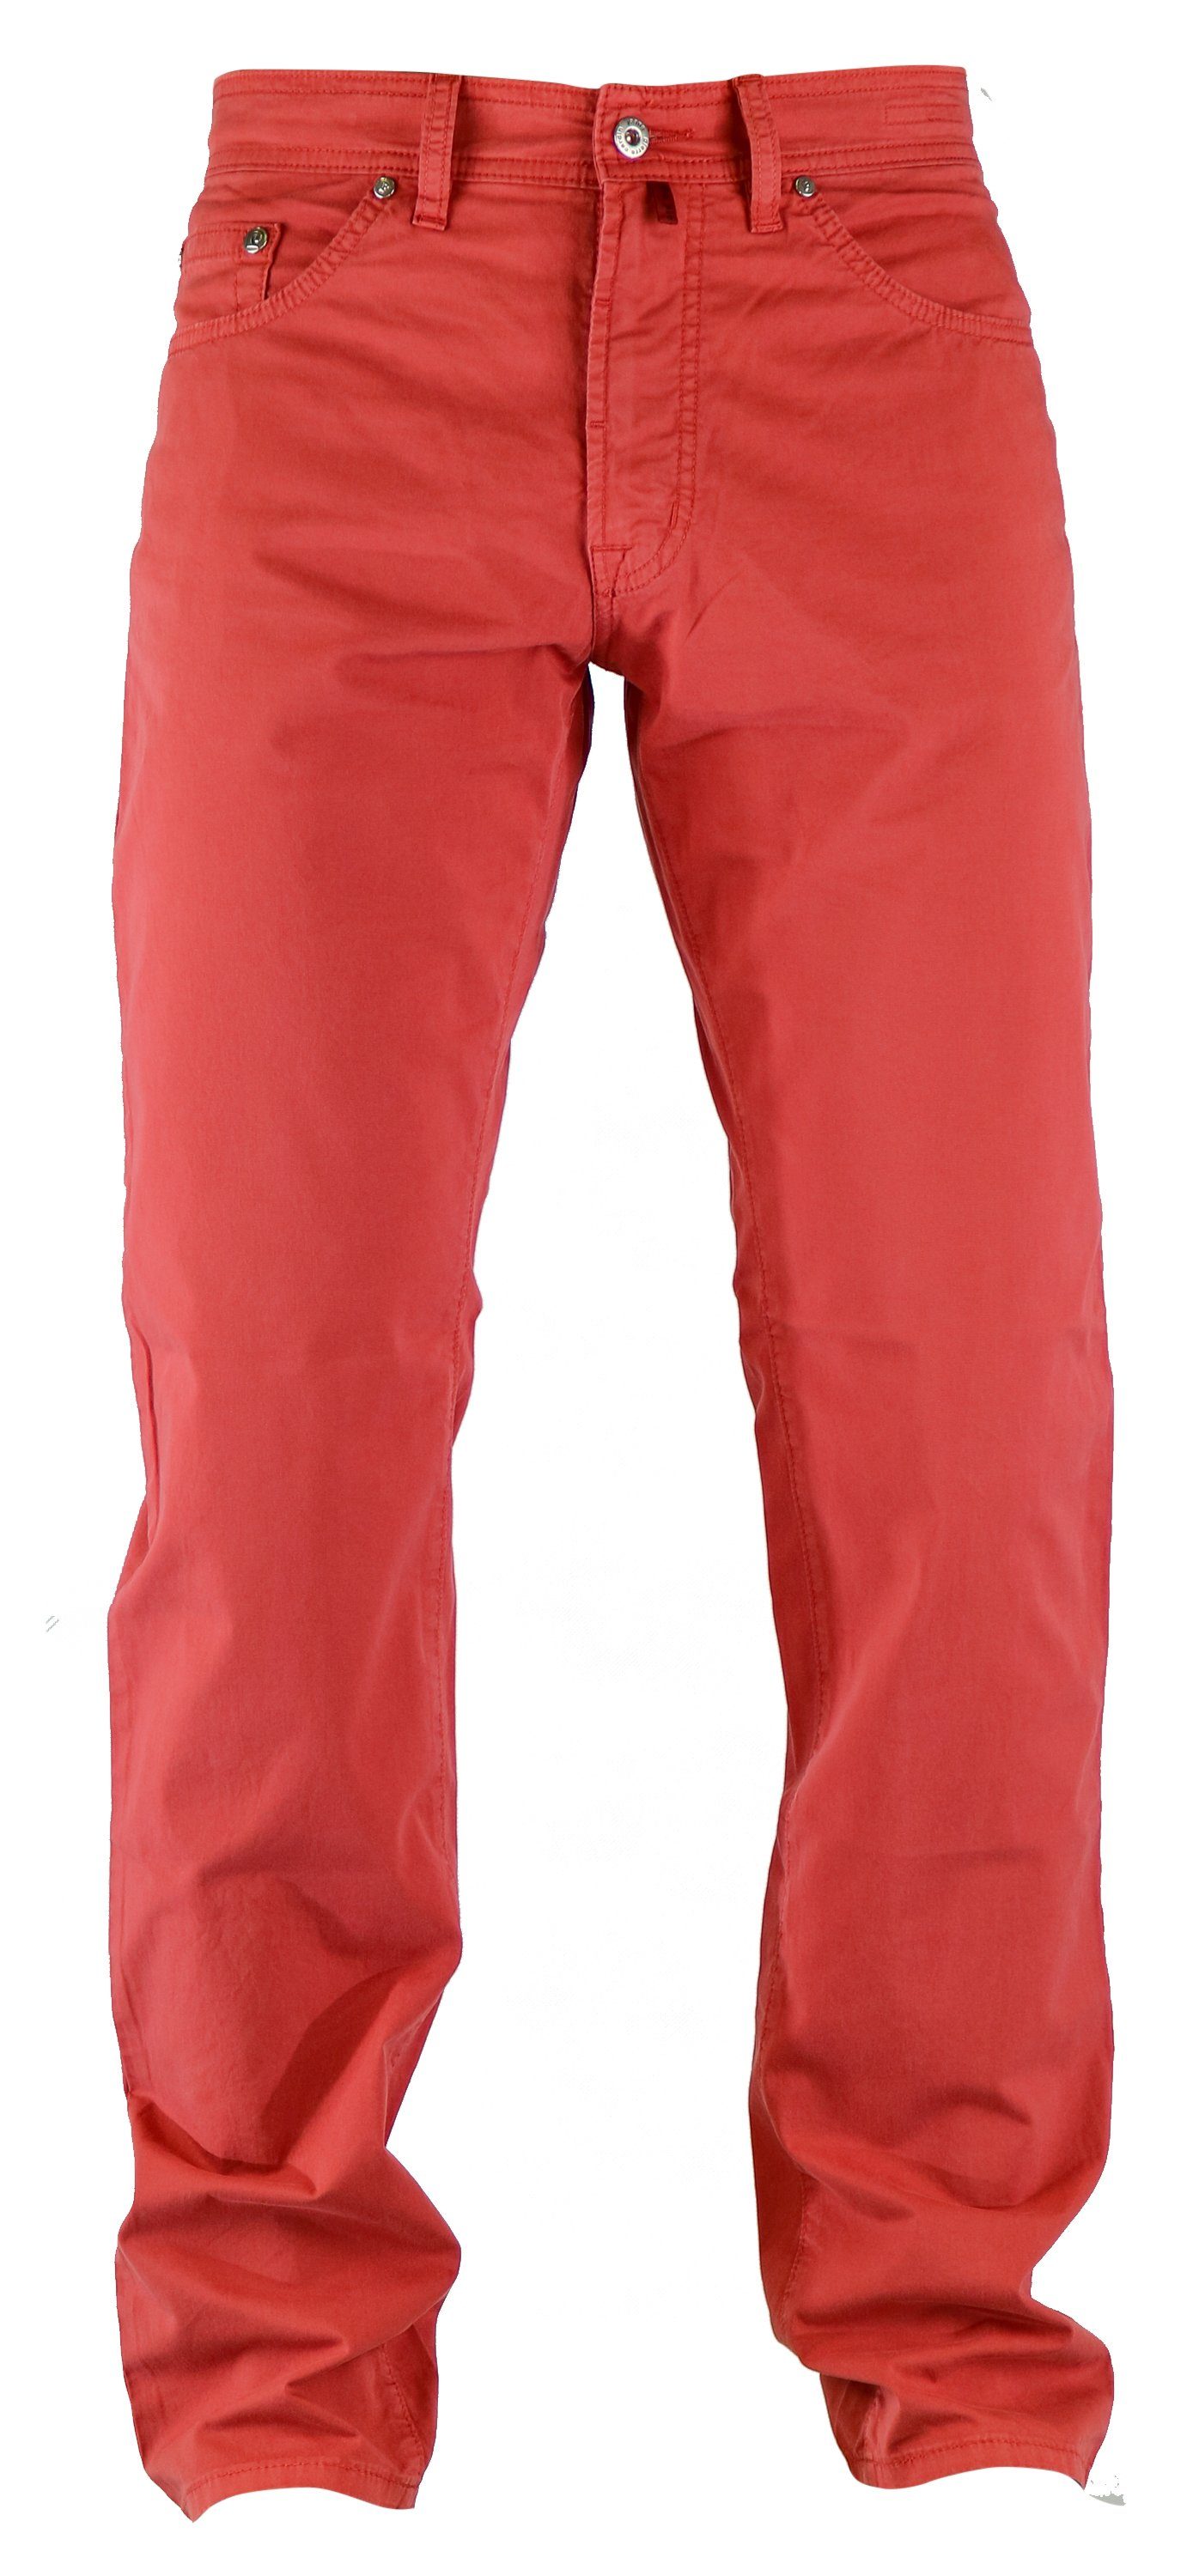 Pierre Cardin 5-Pocket-Jeans PIERRE summer touch 2021.95 air 3196 CARDIN DEAUVILLE red